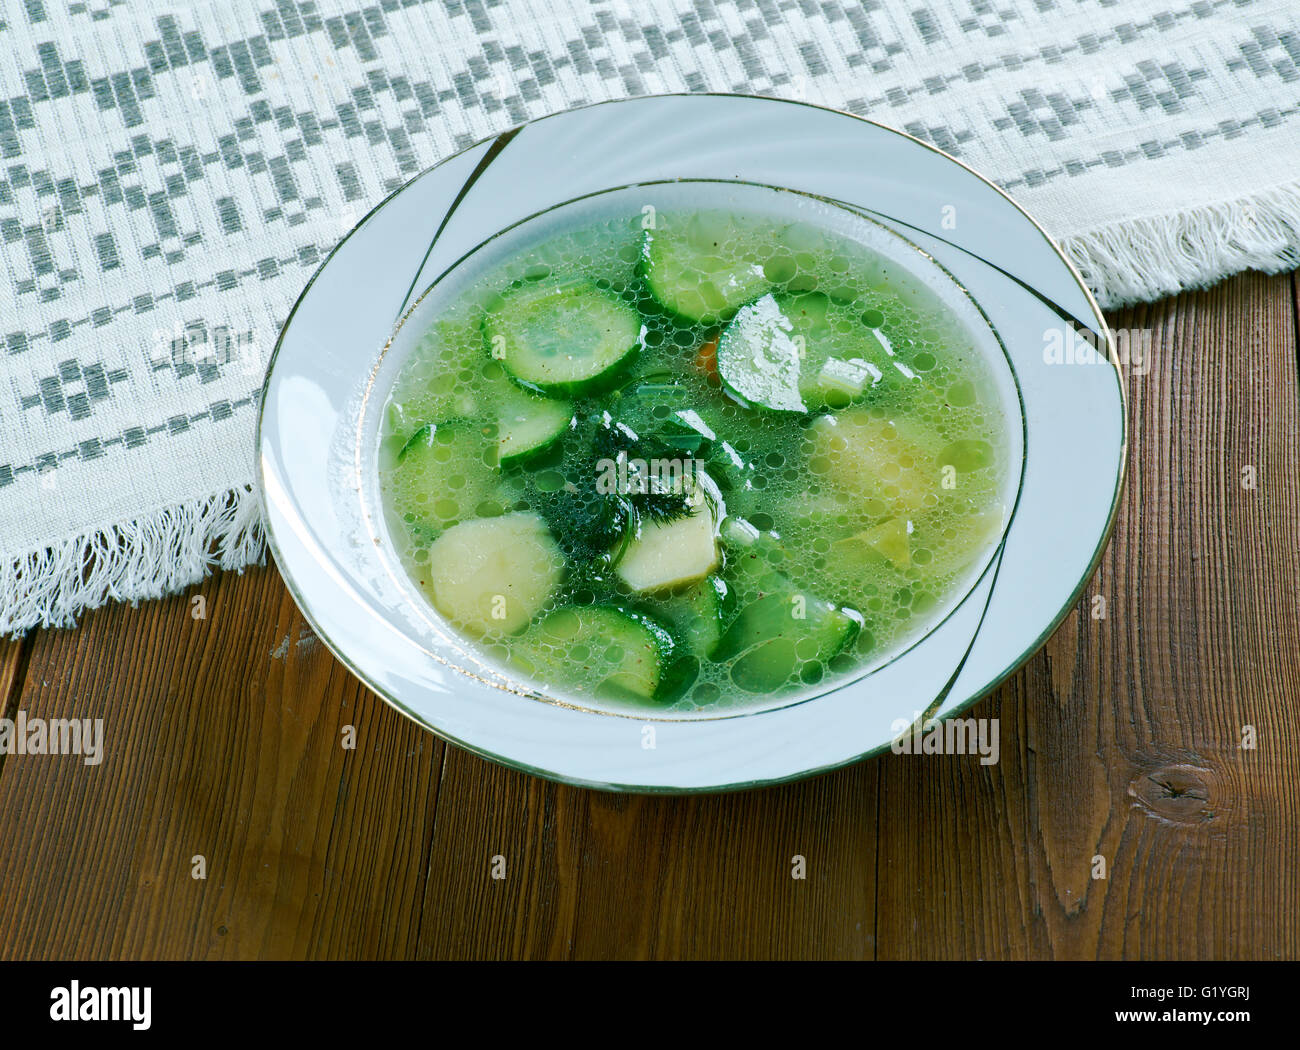 Spreewalder Gurken Suppe - German cucumber soup Stock Photo - Alamy